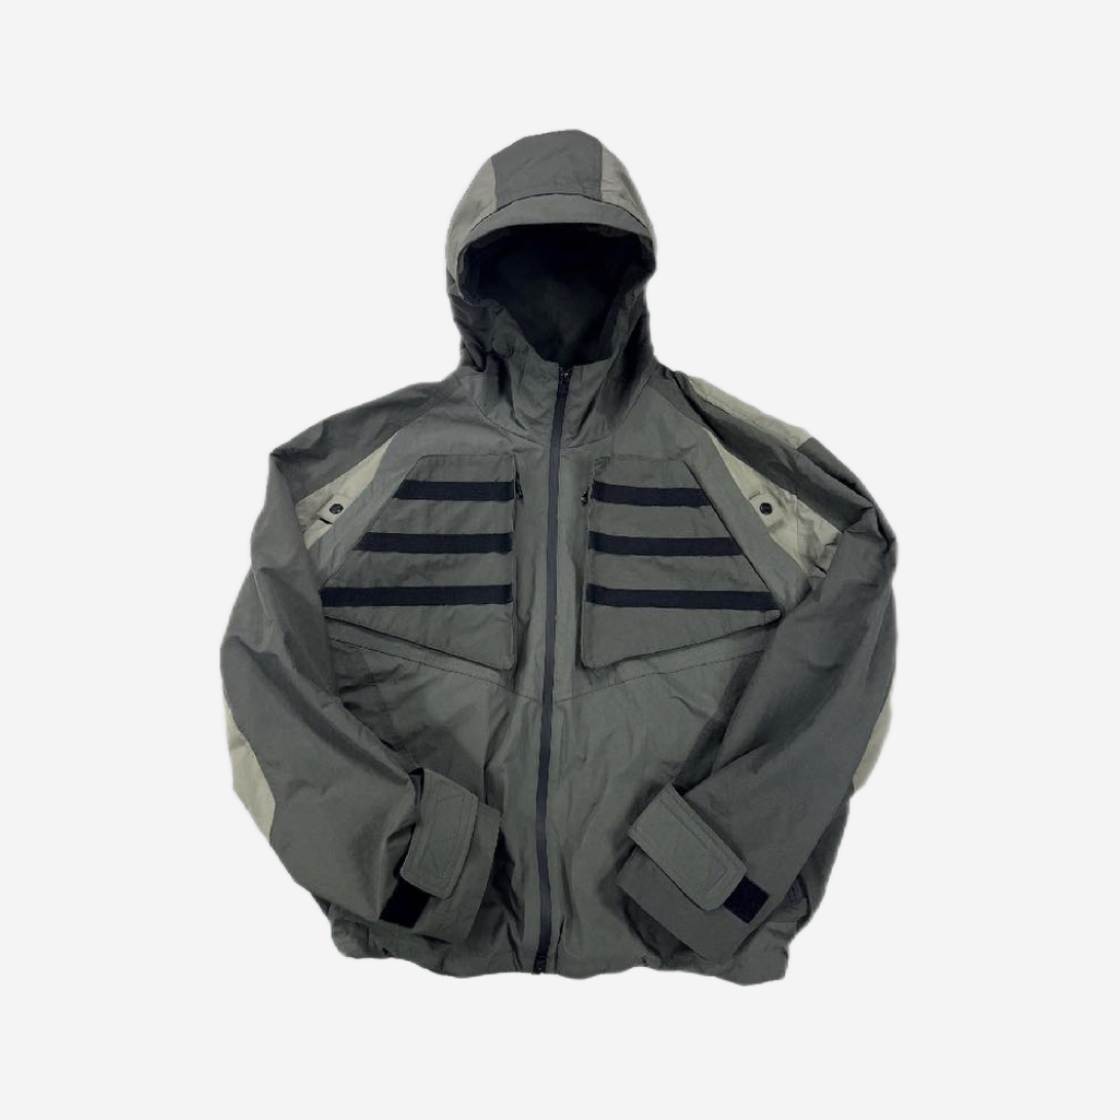 Undermycar x STU Gork Multi Taping Military Jacket Moon Night - Galleria Exclusive